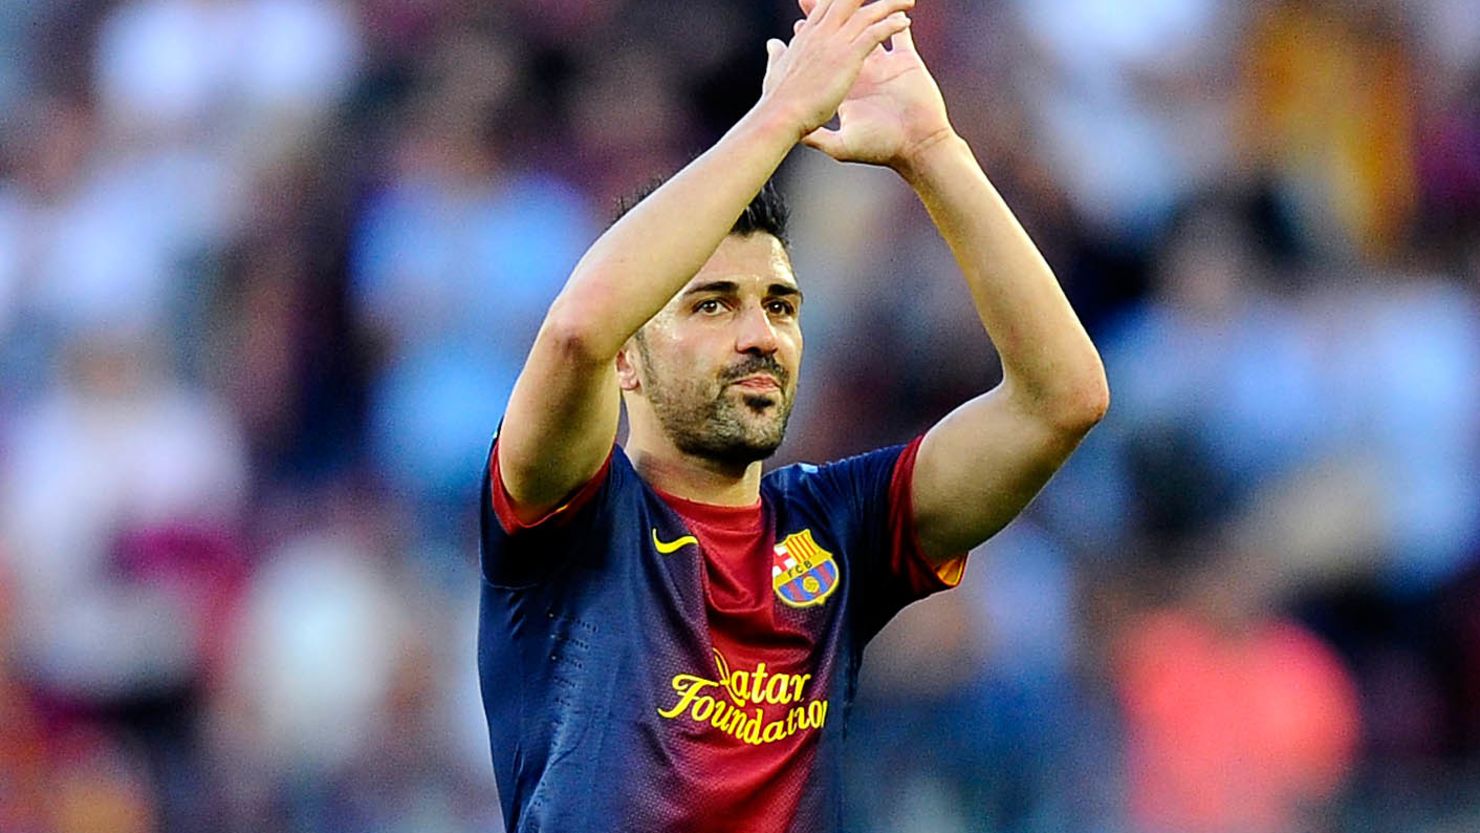 Spain striker David Villa arrived at Barcelona in 2010 from Valencia.